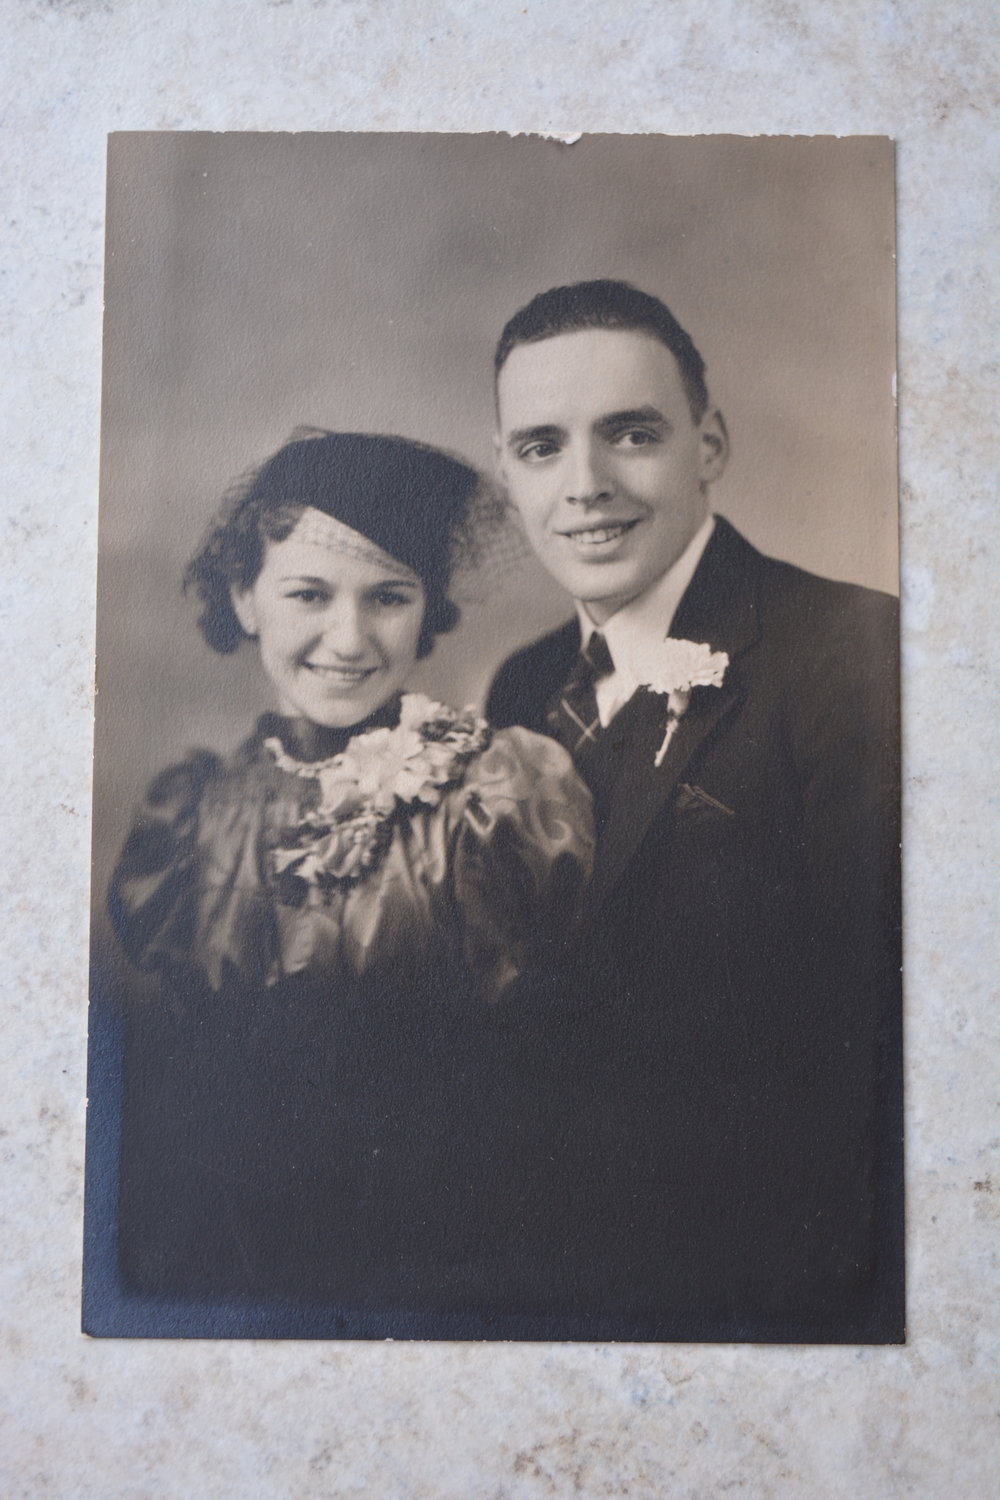 Helen and Joe Cresap on their wedding day in 1938.